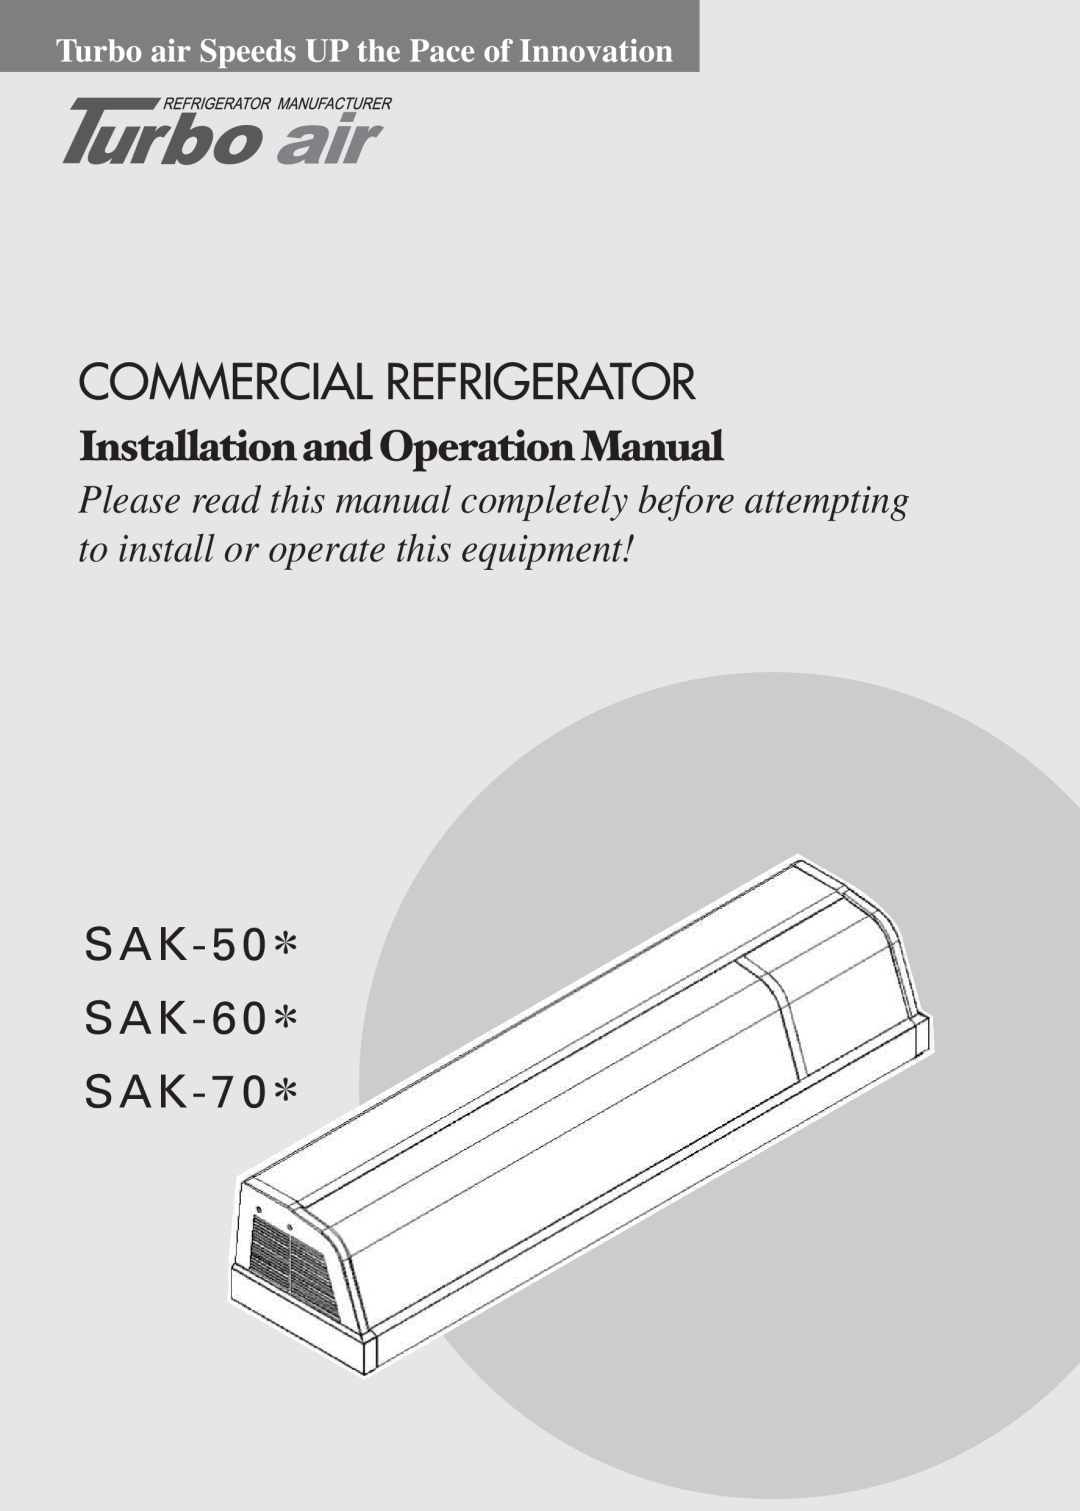 Turbo Air manual Commercial Refrigerator, SAK-50 SAK-60 SAK-70, Turbo air Speeds UP the Pace of Innovation 